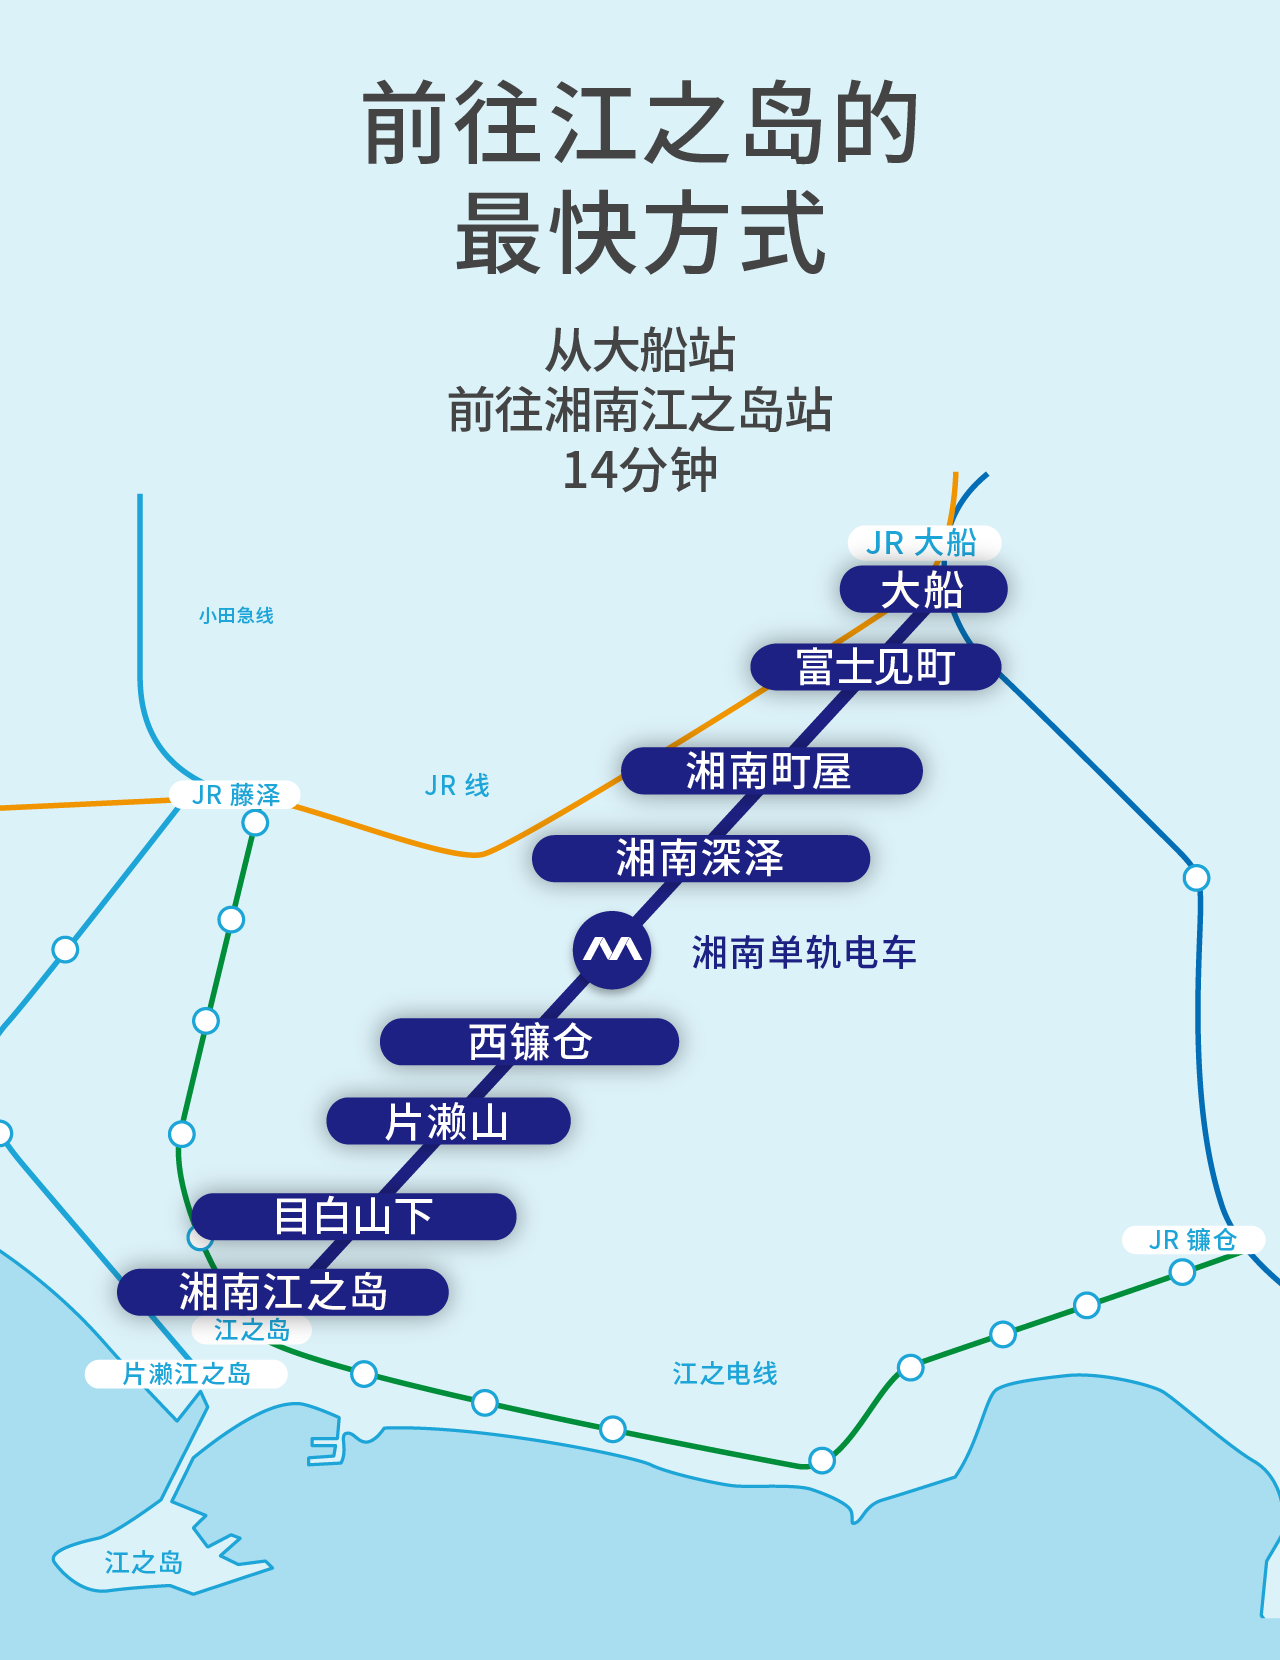 The fastest way to go Enoshima From Ofuna to Shonan-Enoshima 310Yen / 14min.